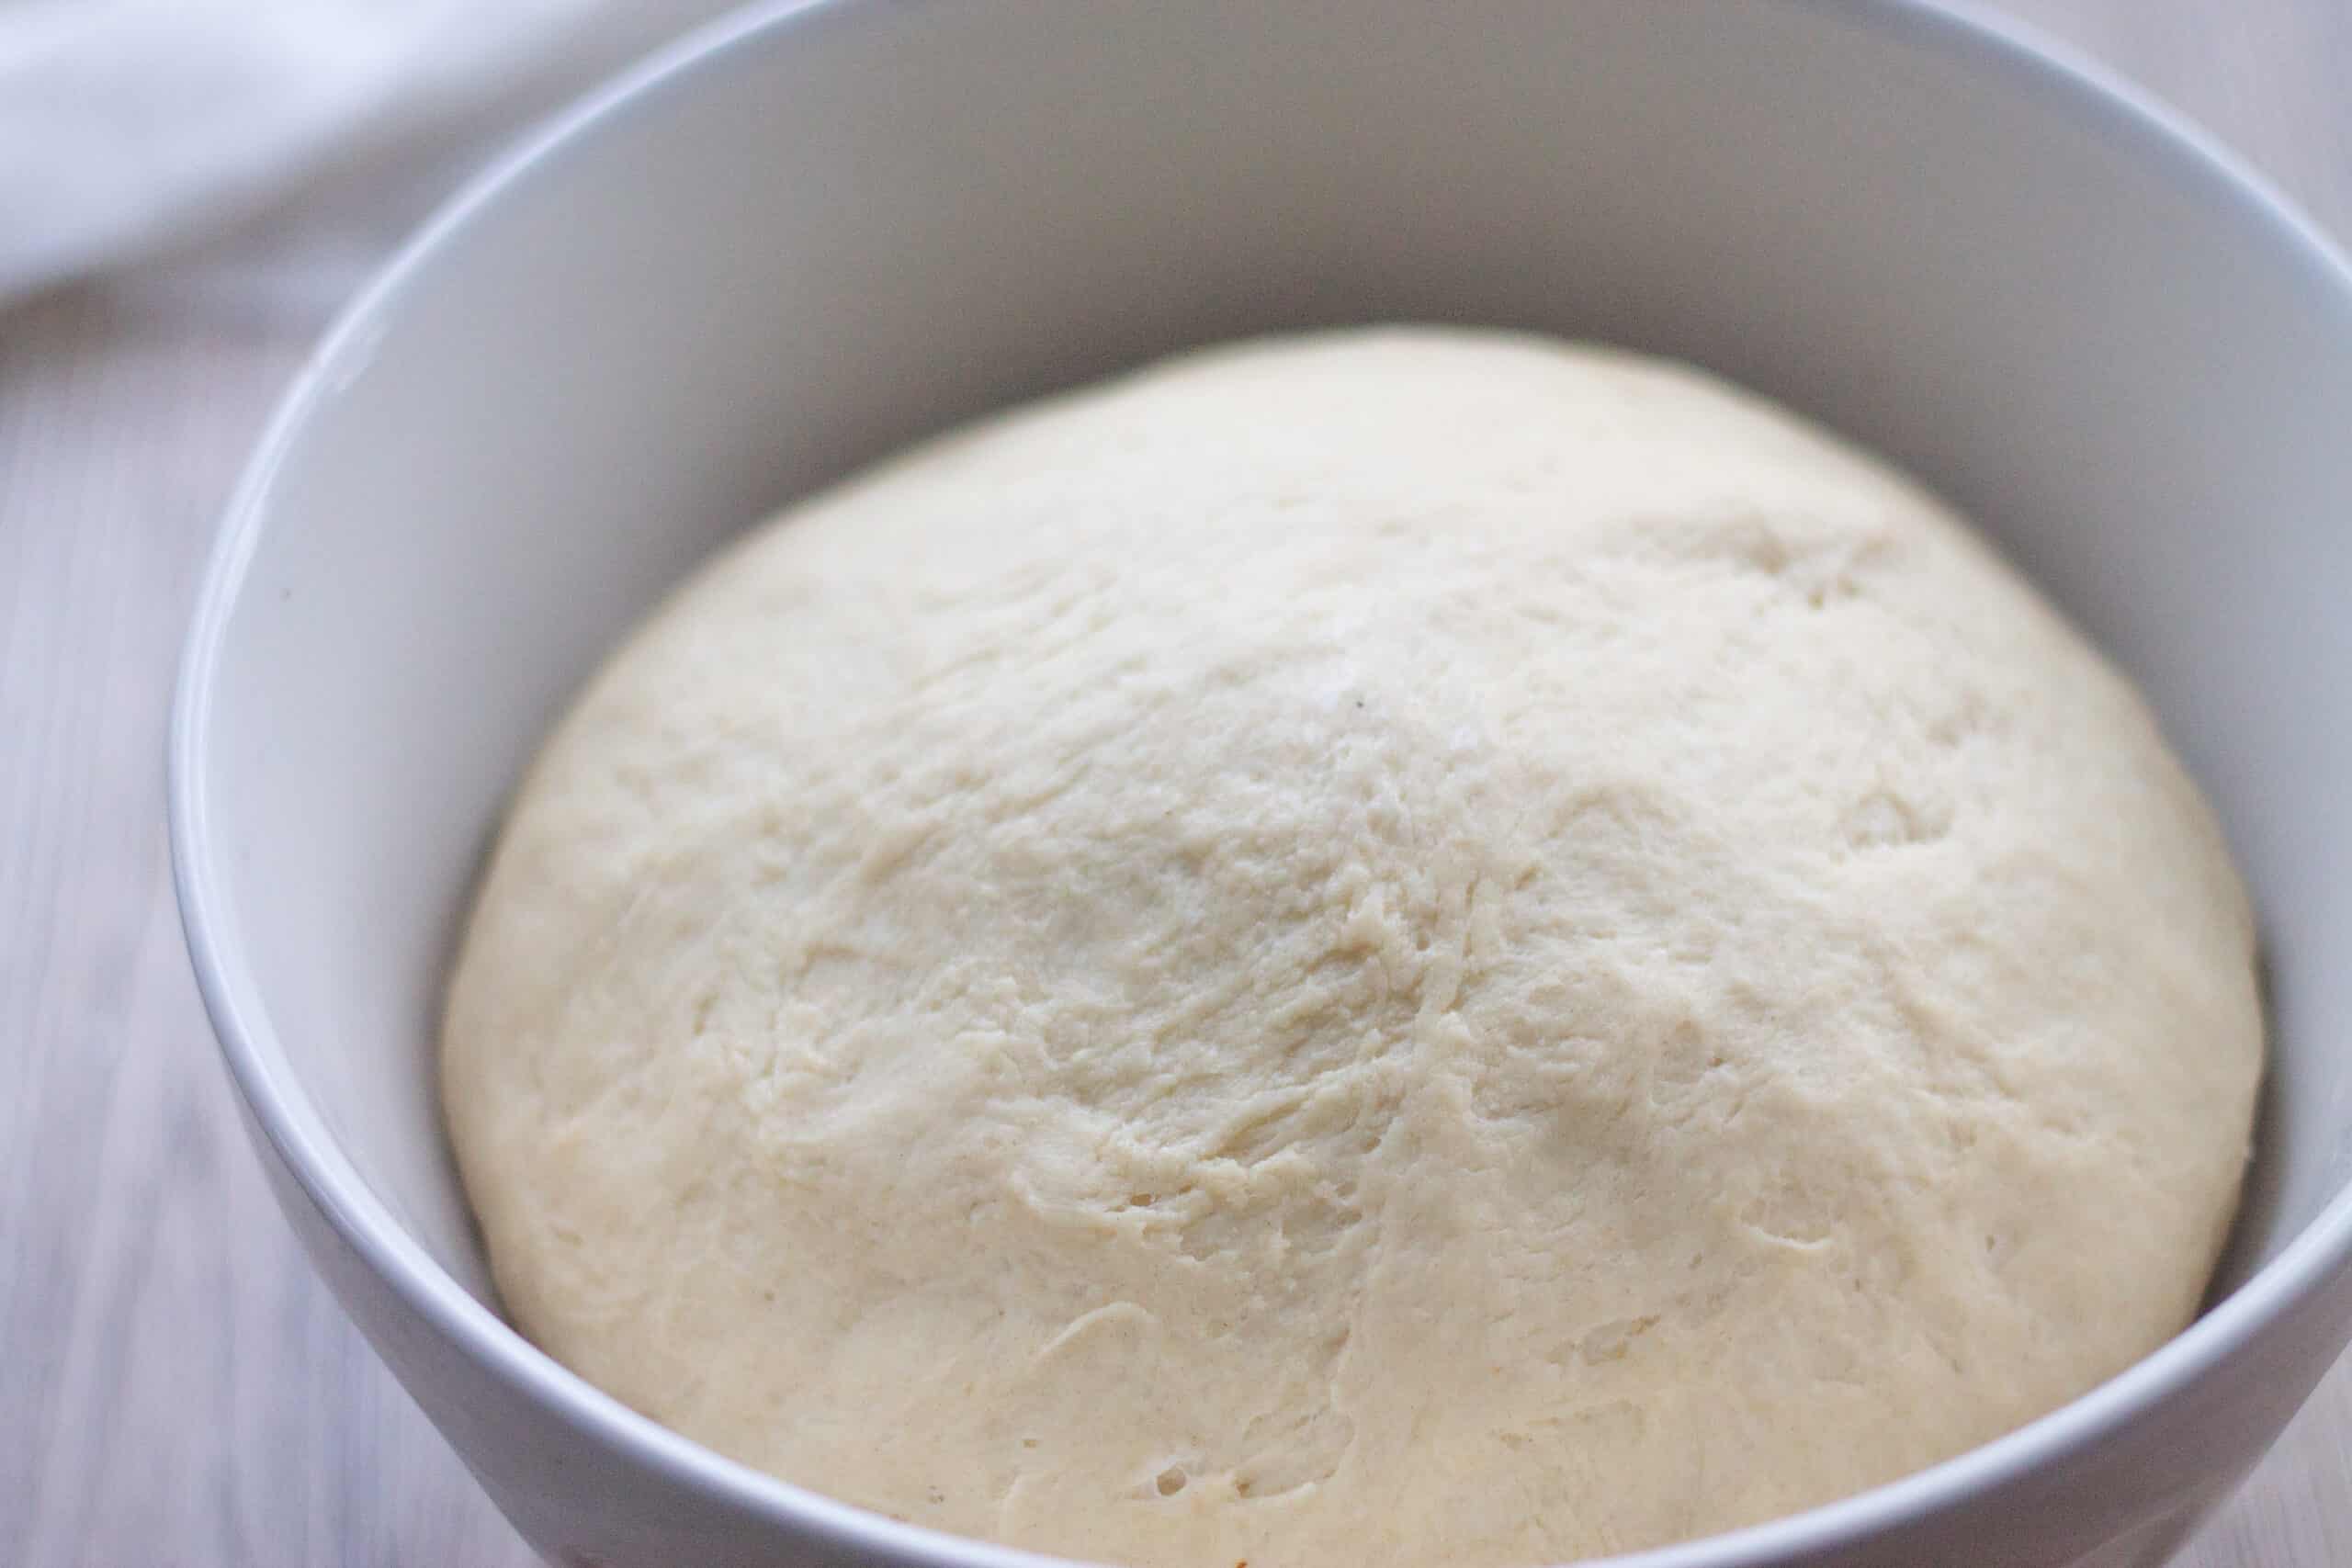 Cinnamon roll dough, doubled